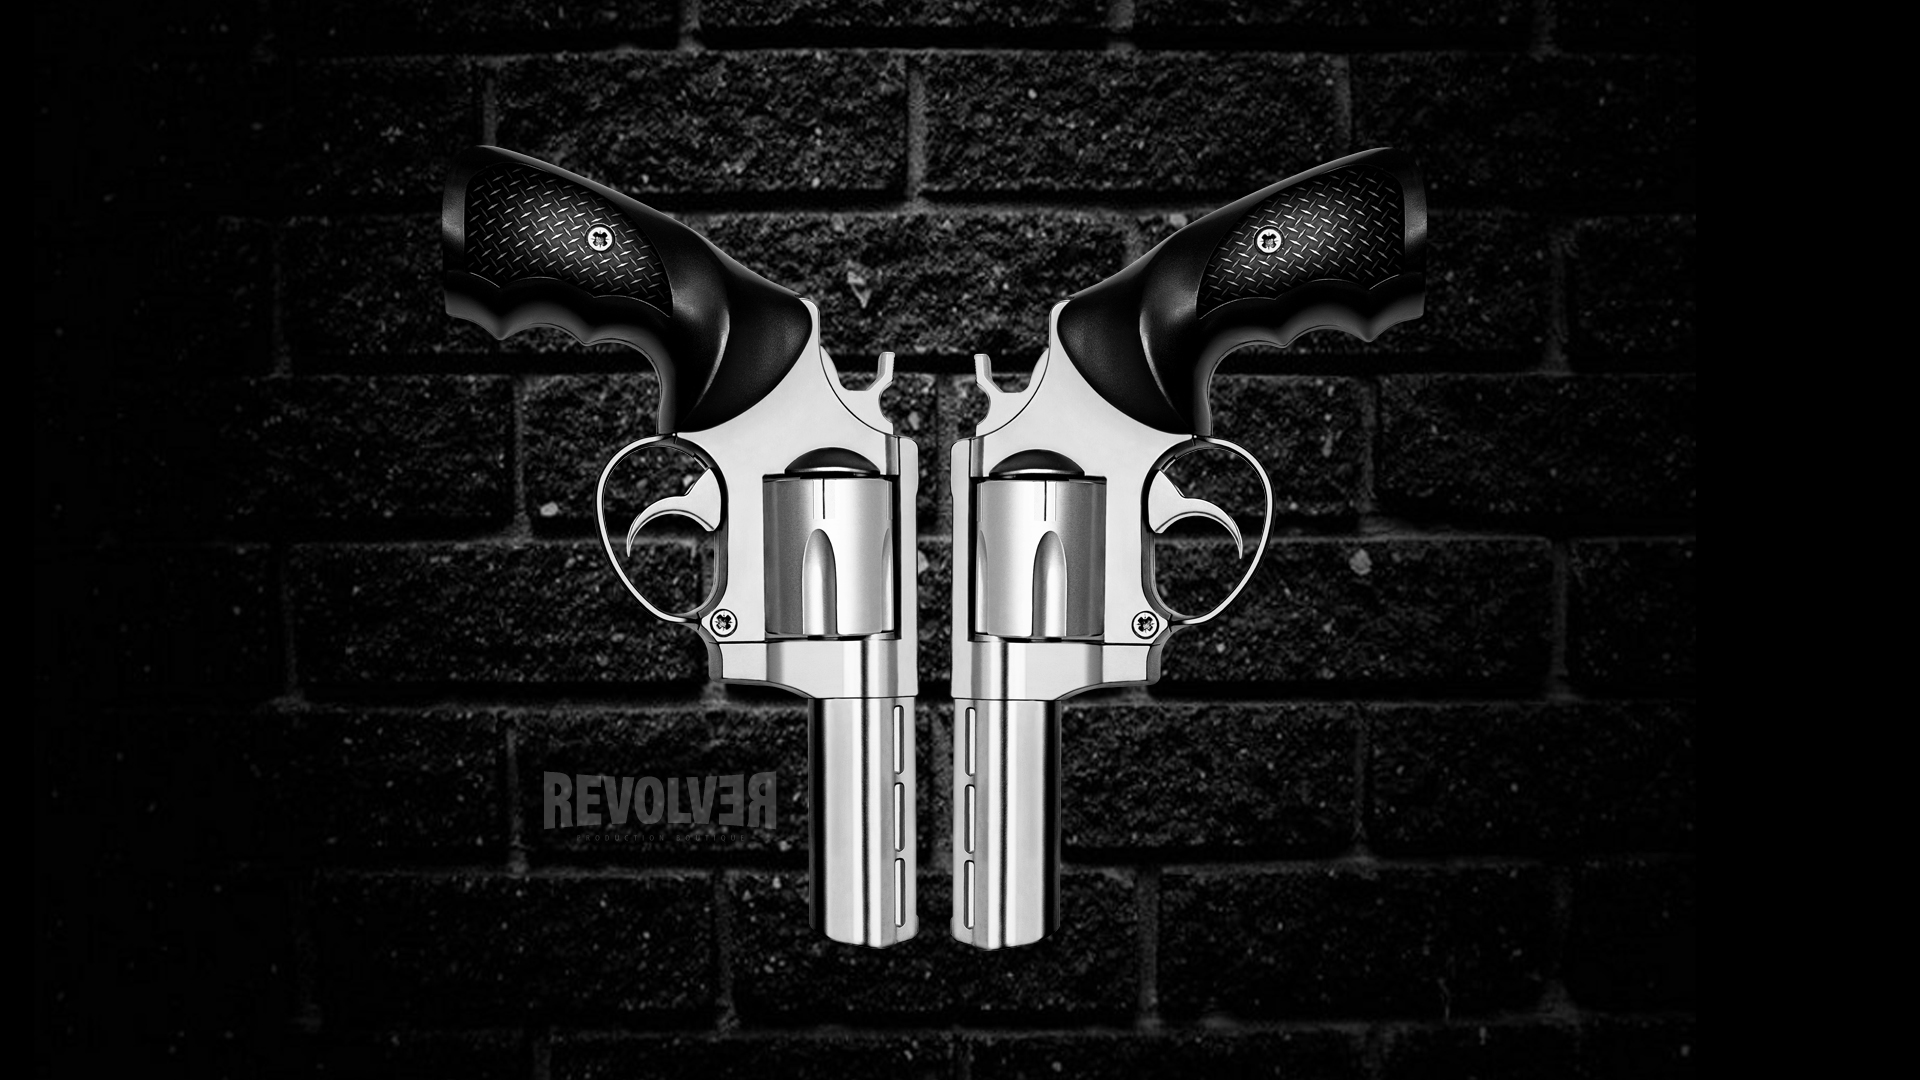 Revolver Digital Art HDw Eweb4